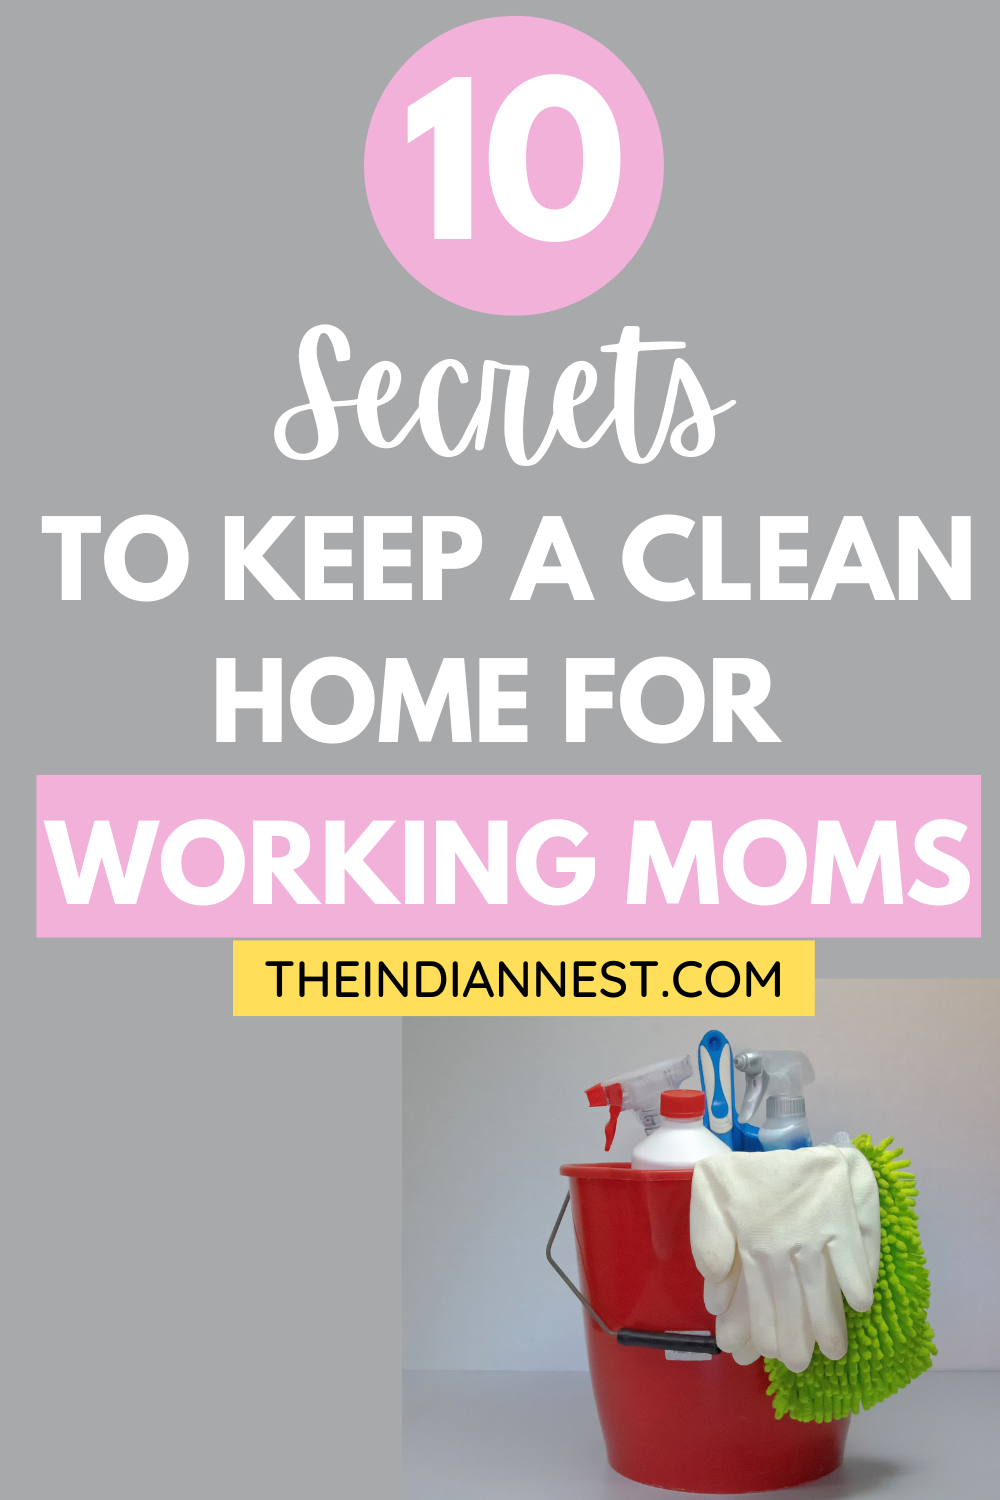 10 secrets to keep a clean home